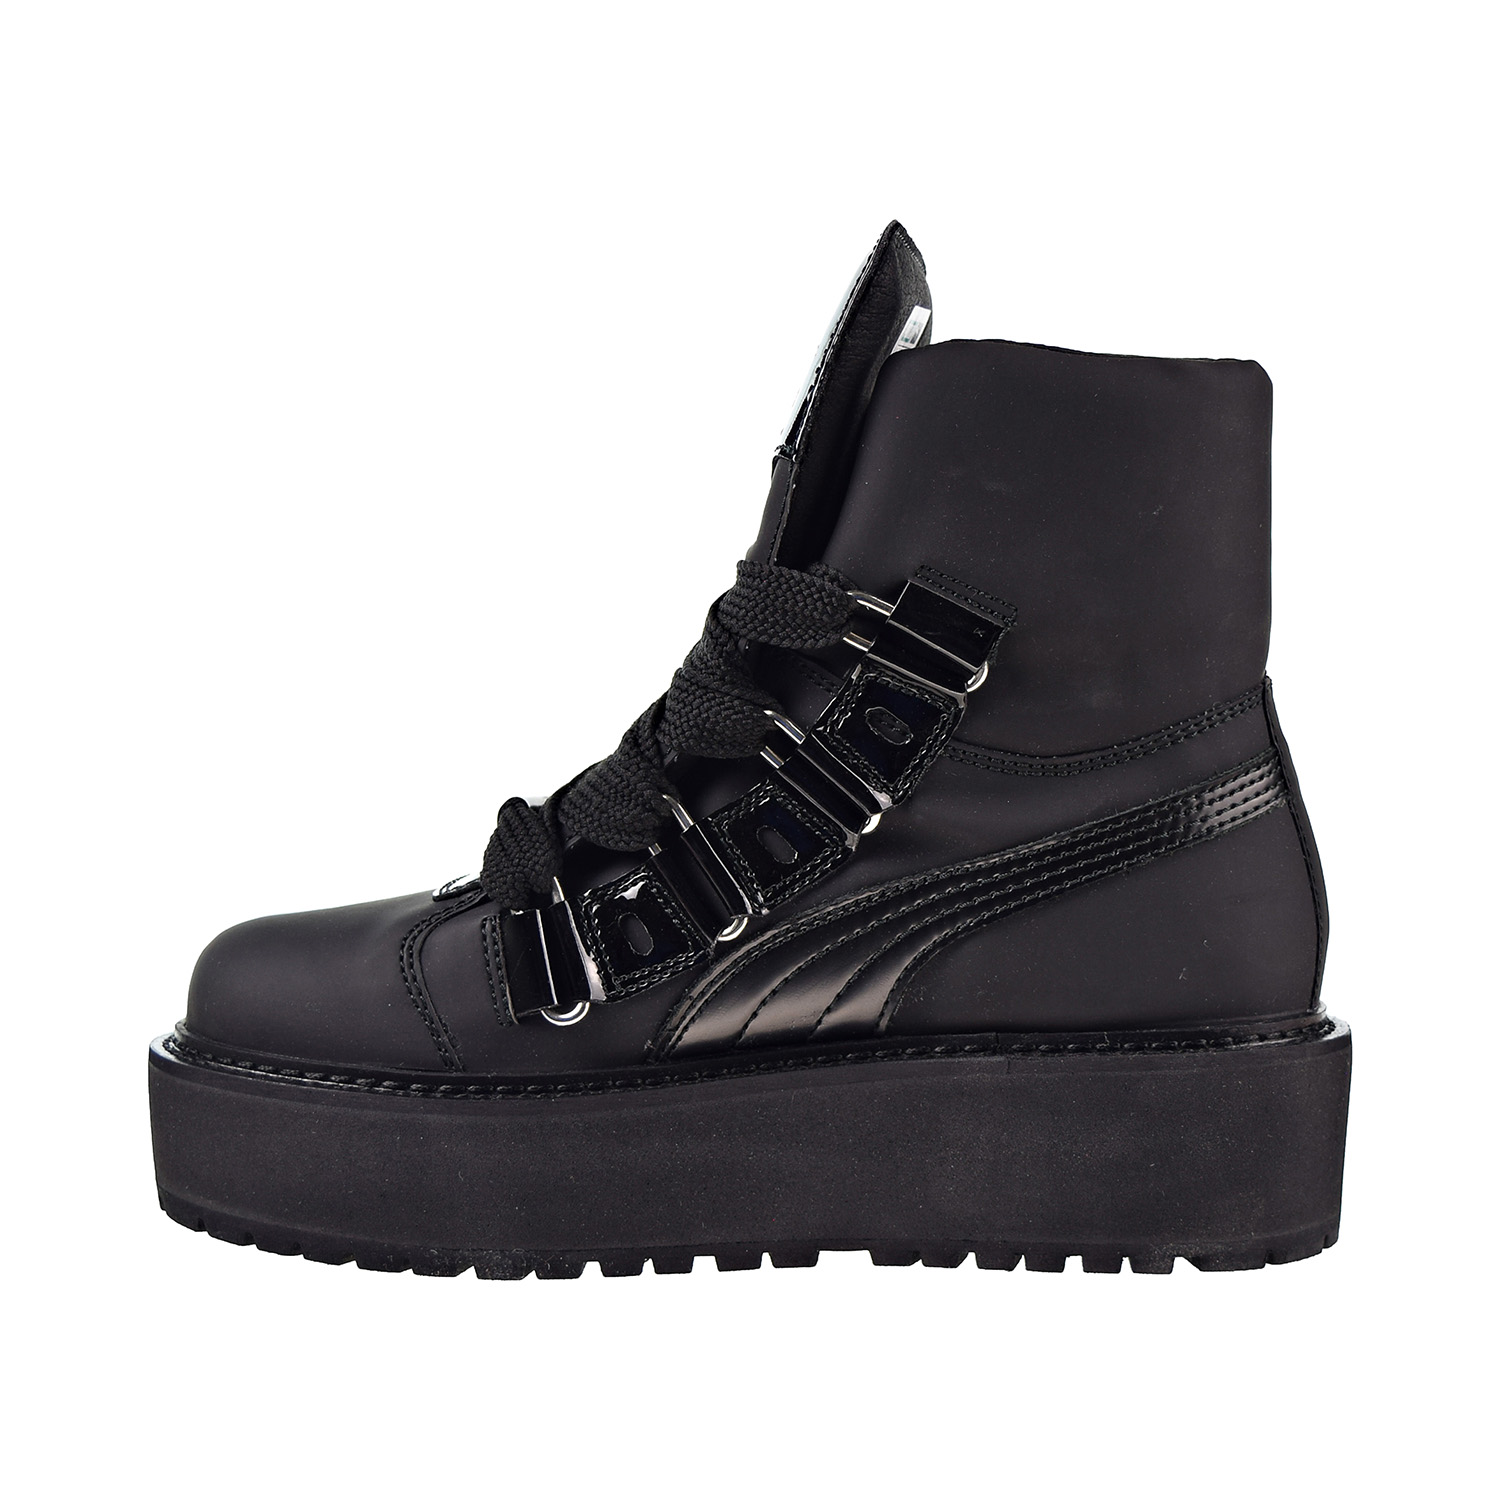 Puma Fenty By Rihanna Men's Platform Sneaker Boots Puma Black 363040-01 - image 4 of 6